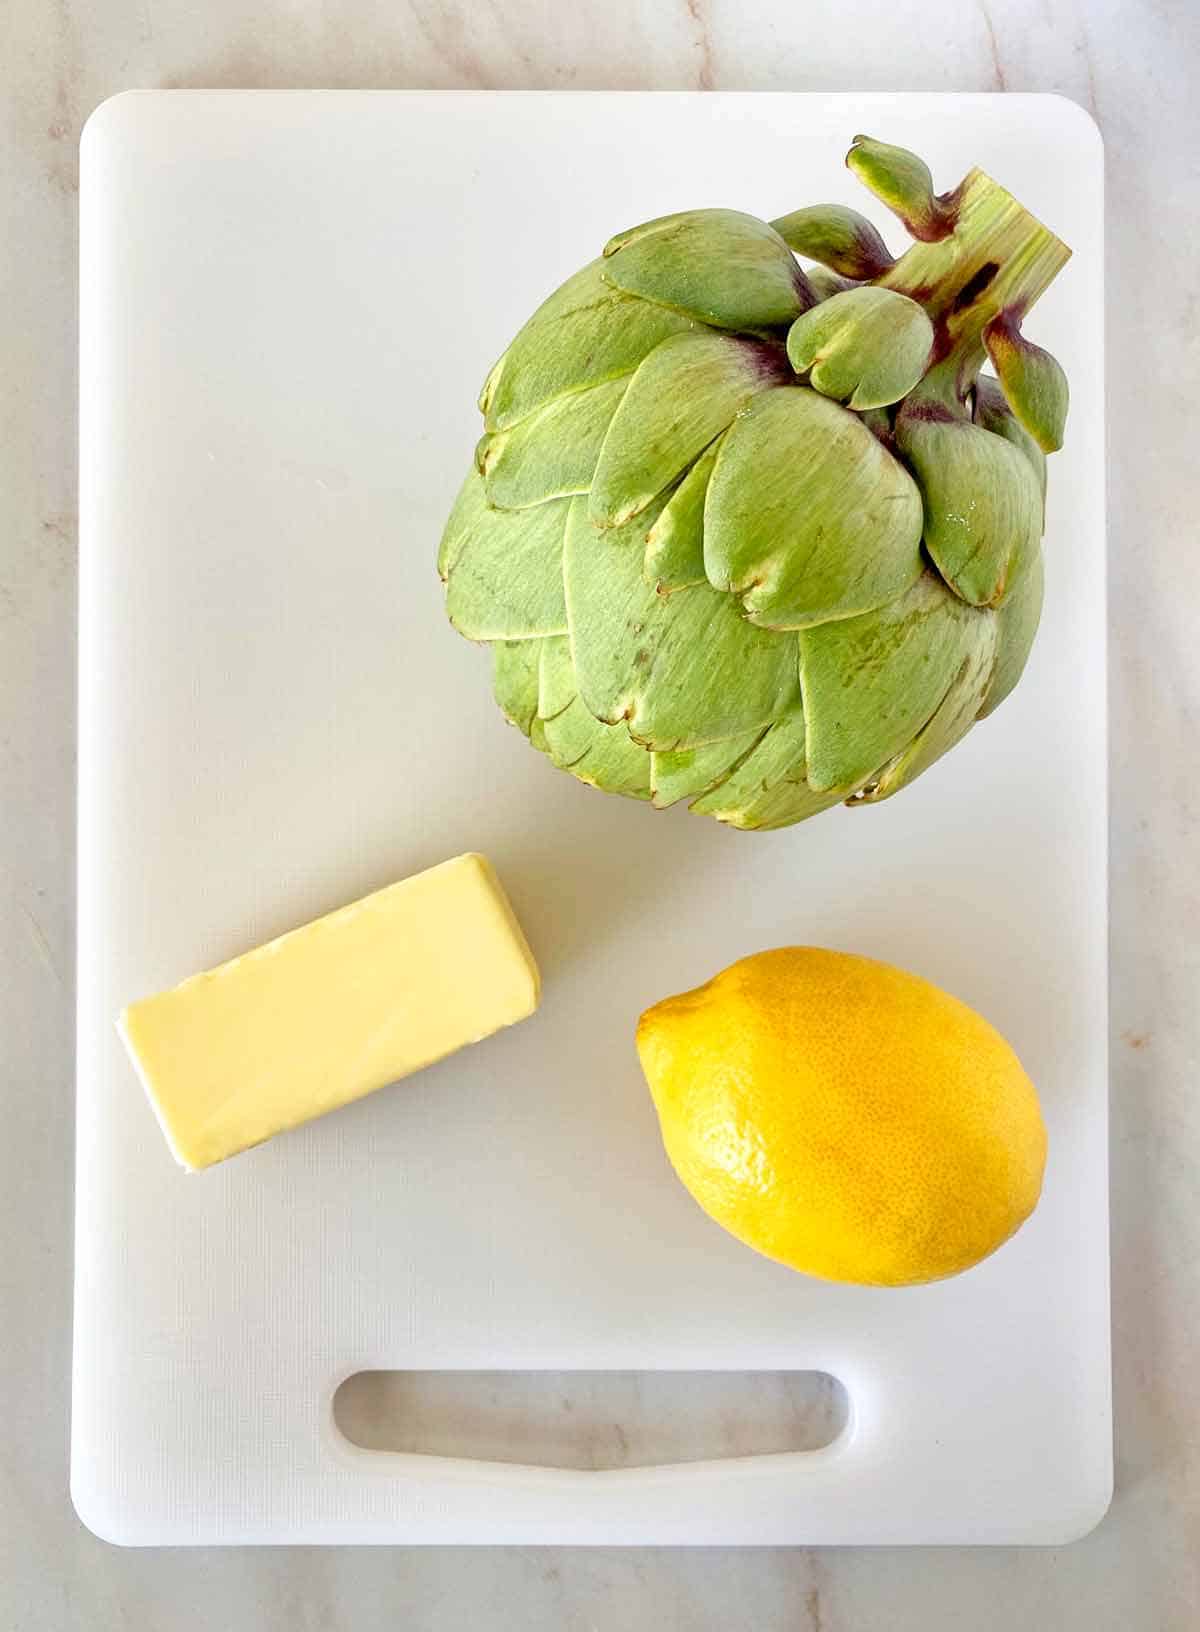 An artichoke, a stick of butter and a lemon on a cutting board.